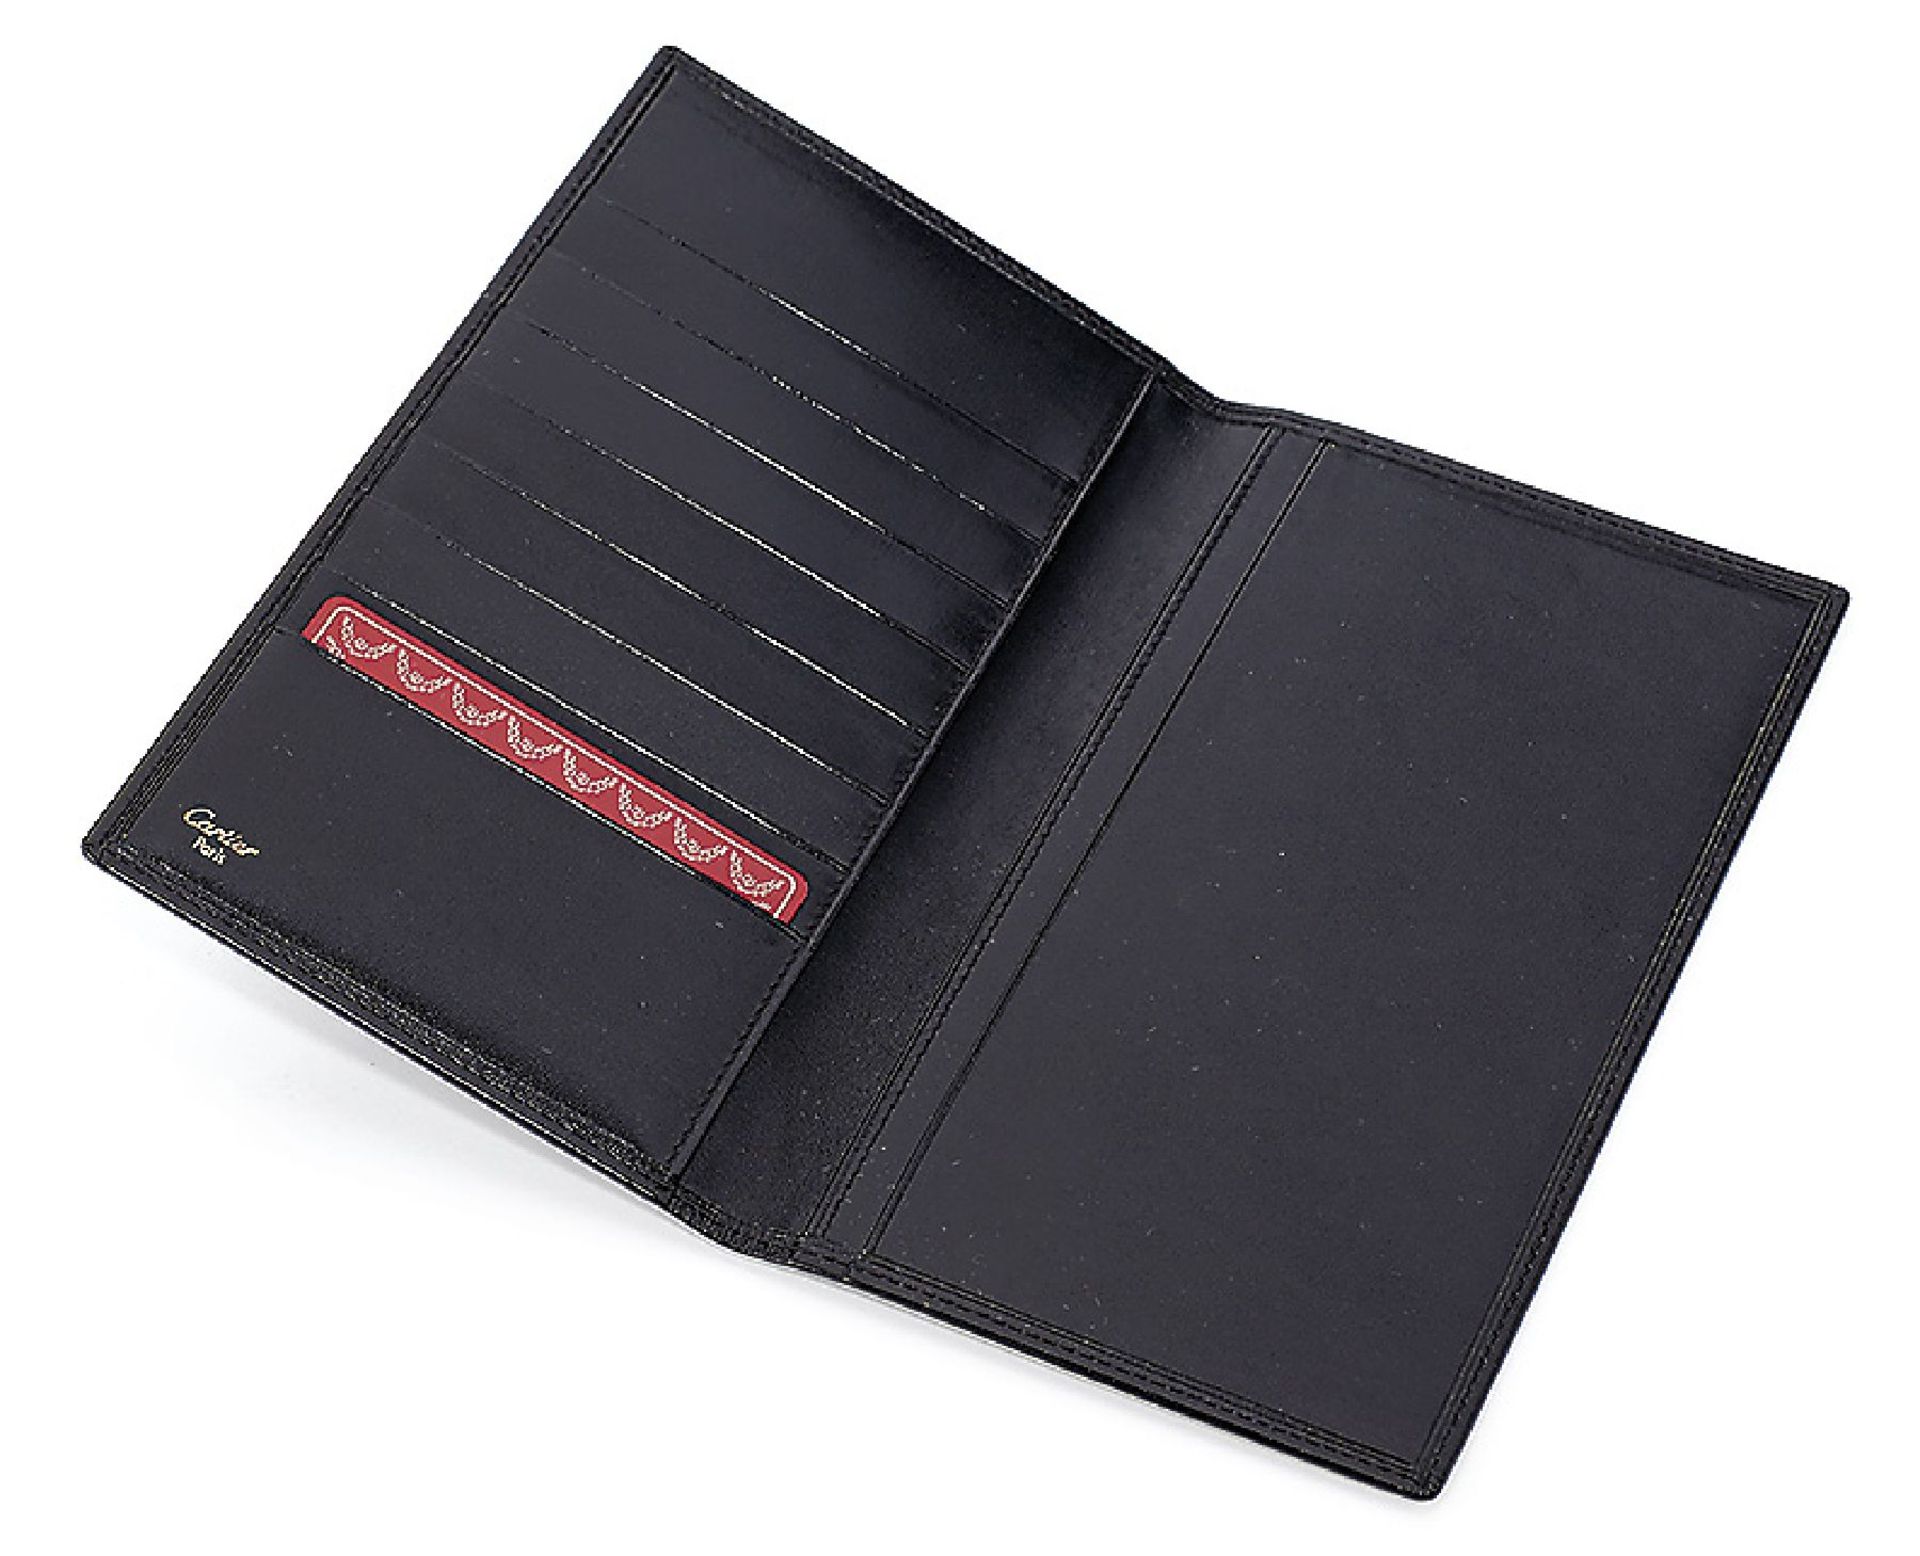 Must de CARTIER wallet , fine, black leather, Cartieremblem gilded, 7 card pockets,3 slot pockets - Bild 3 aus 3